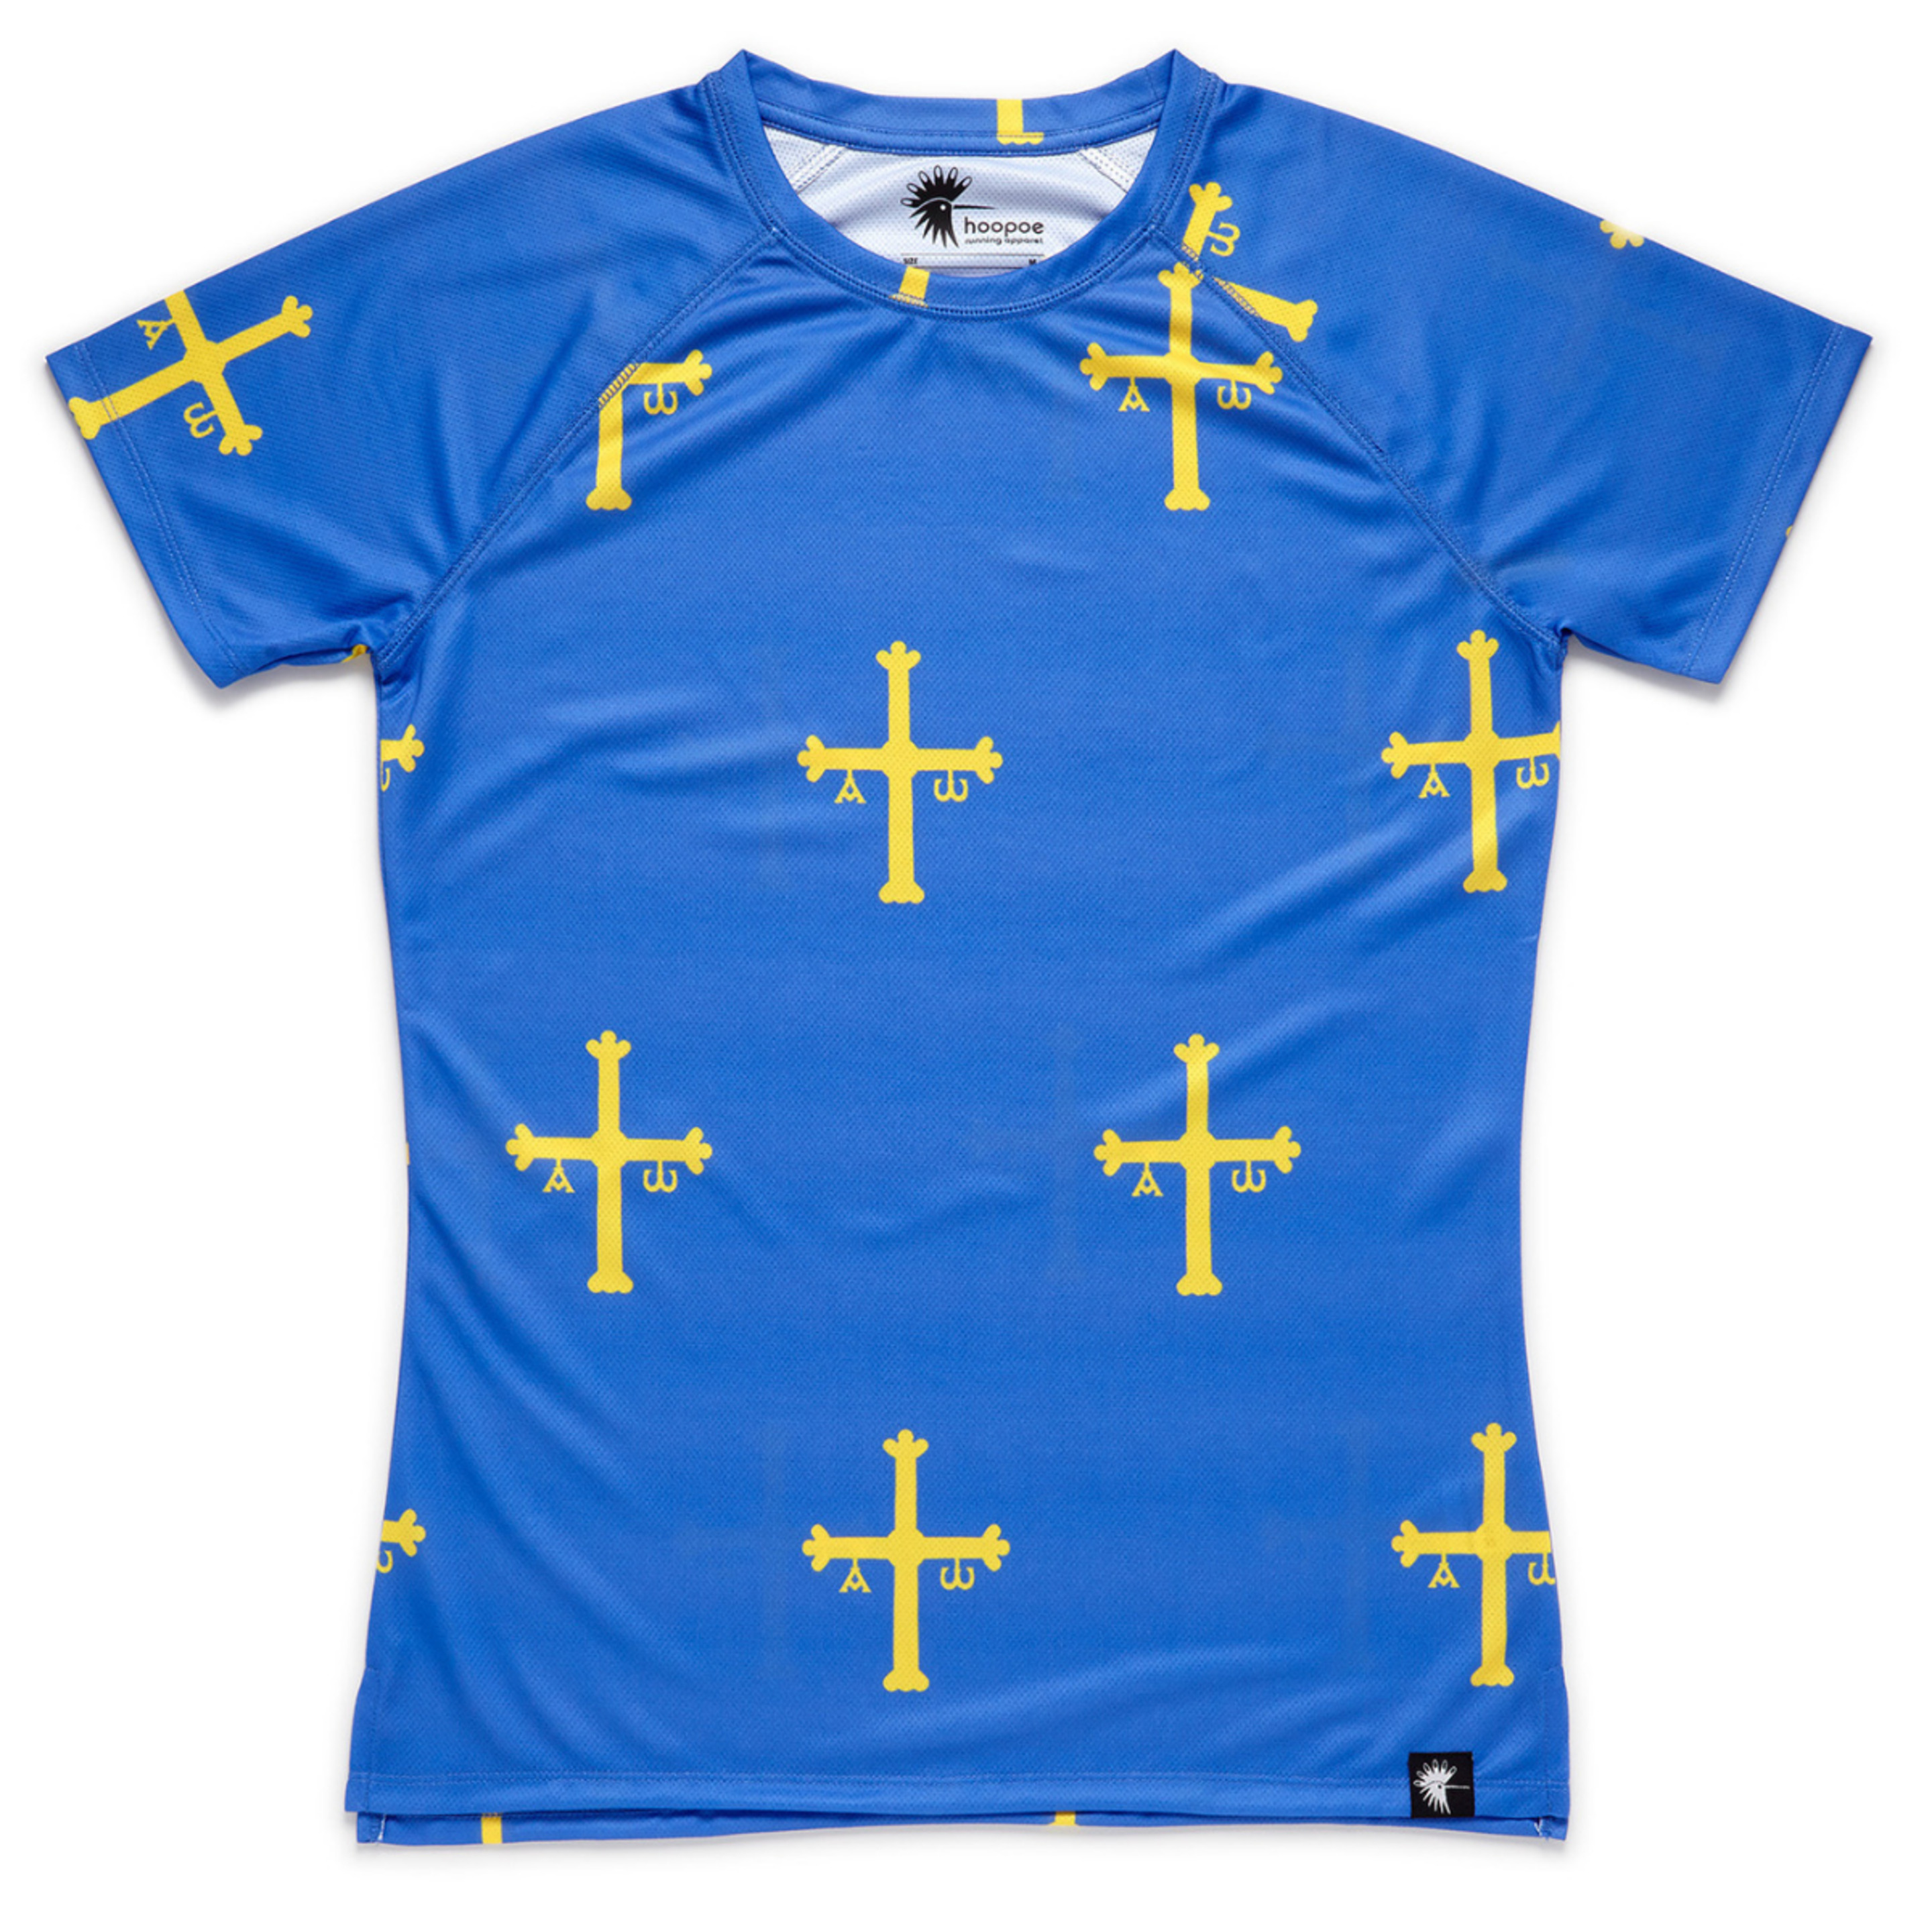 Camiseta De Running Patria Querida Hoopoe Apparel - azul - 